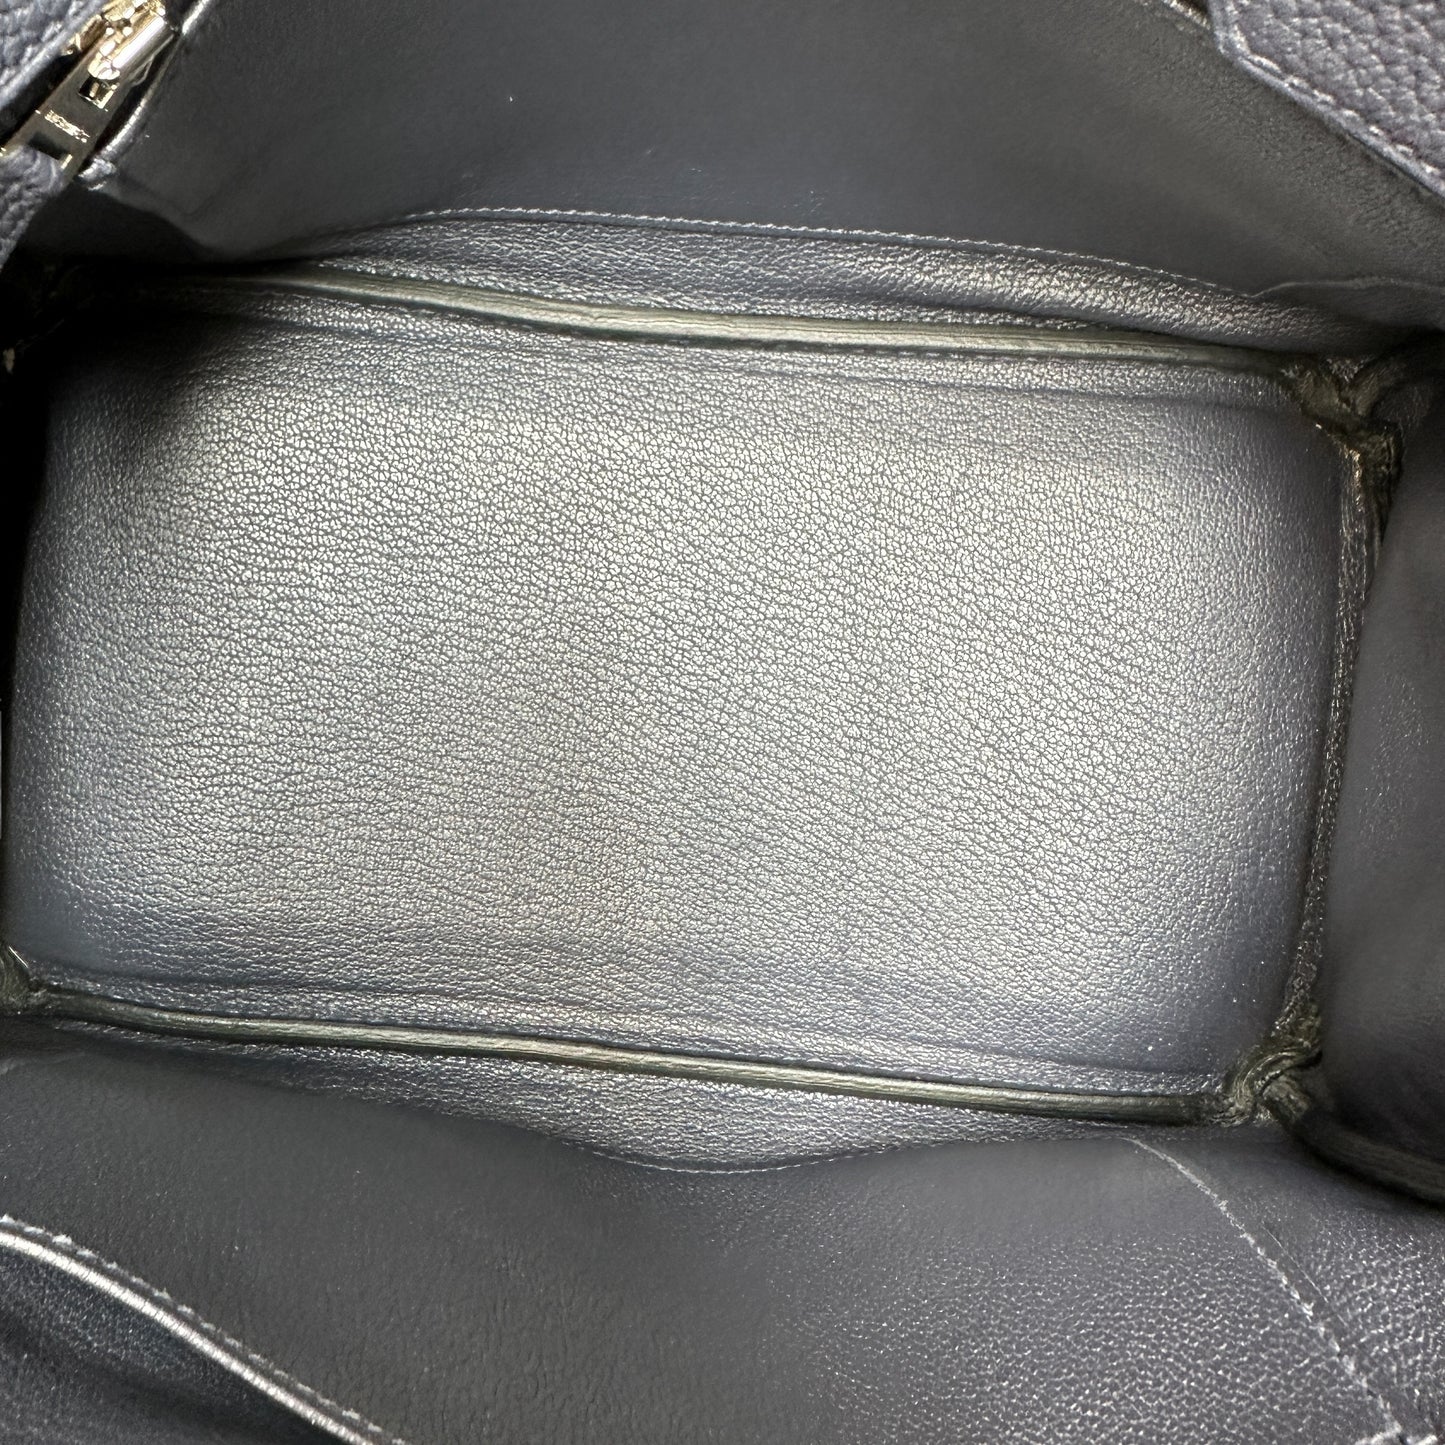 HERMÈS Birkin 25 handbag in Blue Lin Togo leather with Beige de